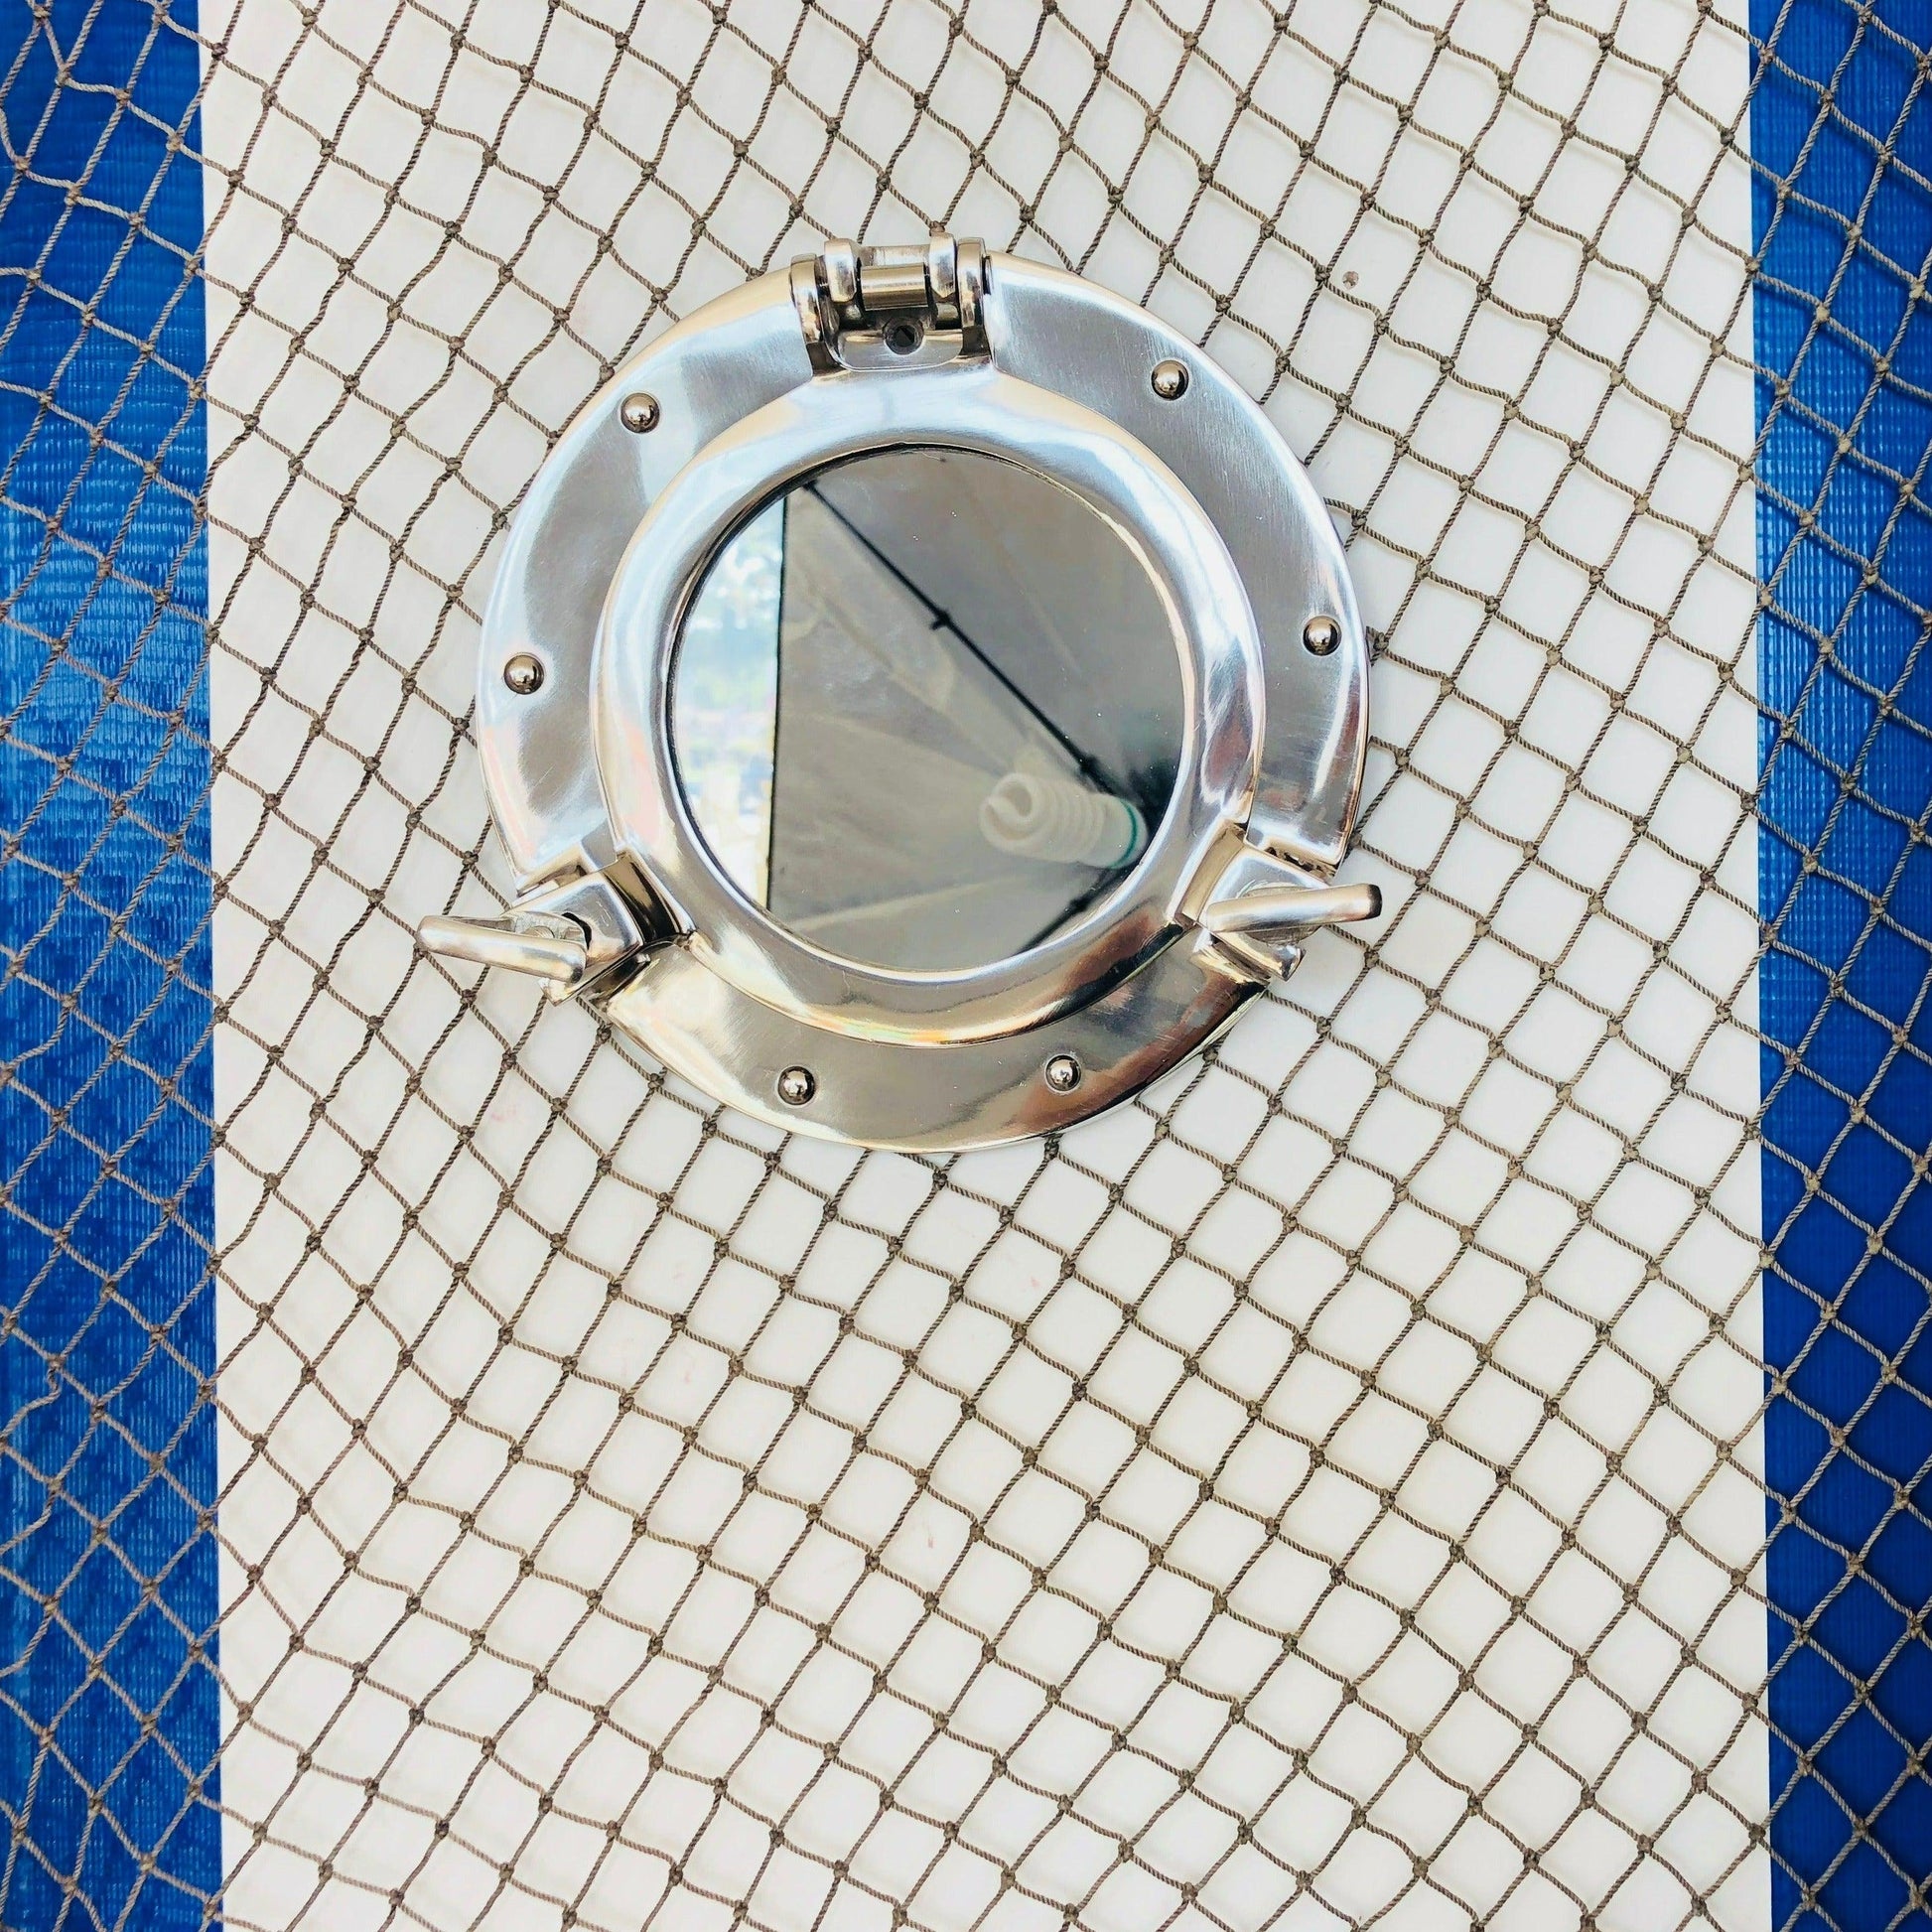 a close up of a metal porthole on a blue and white wall